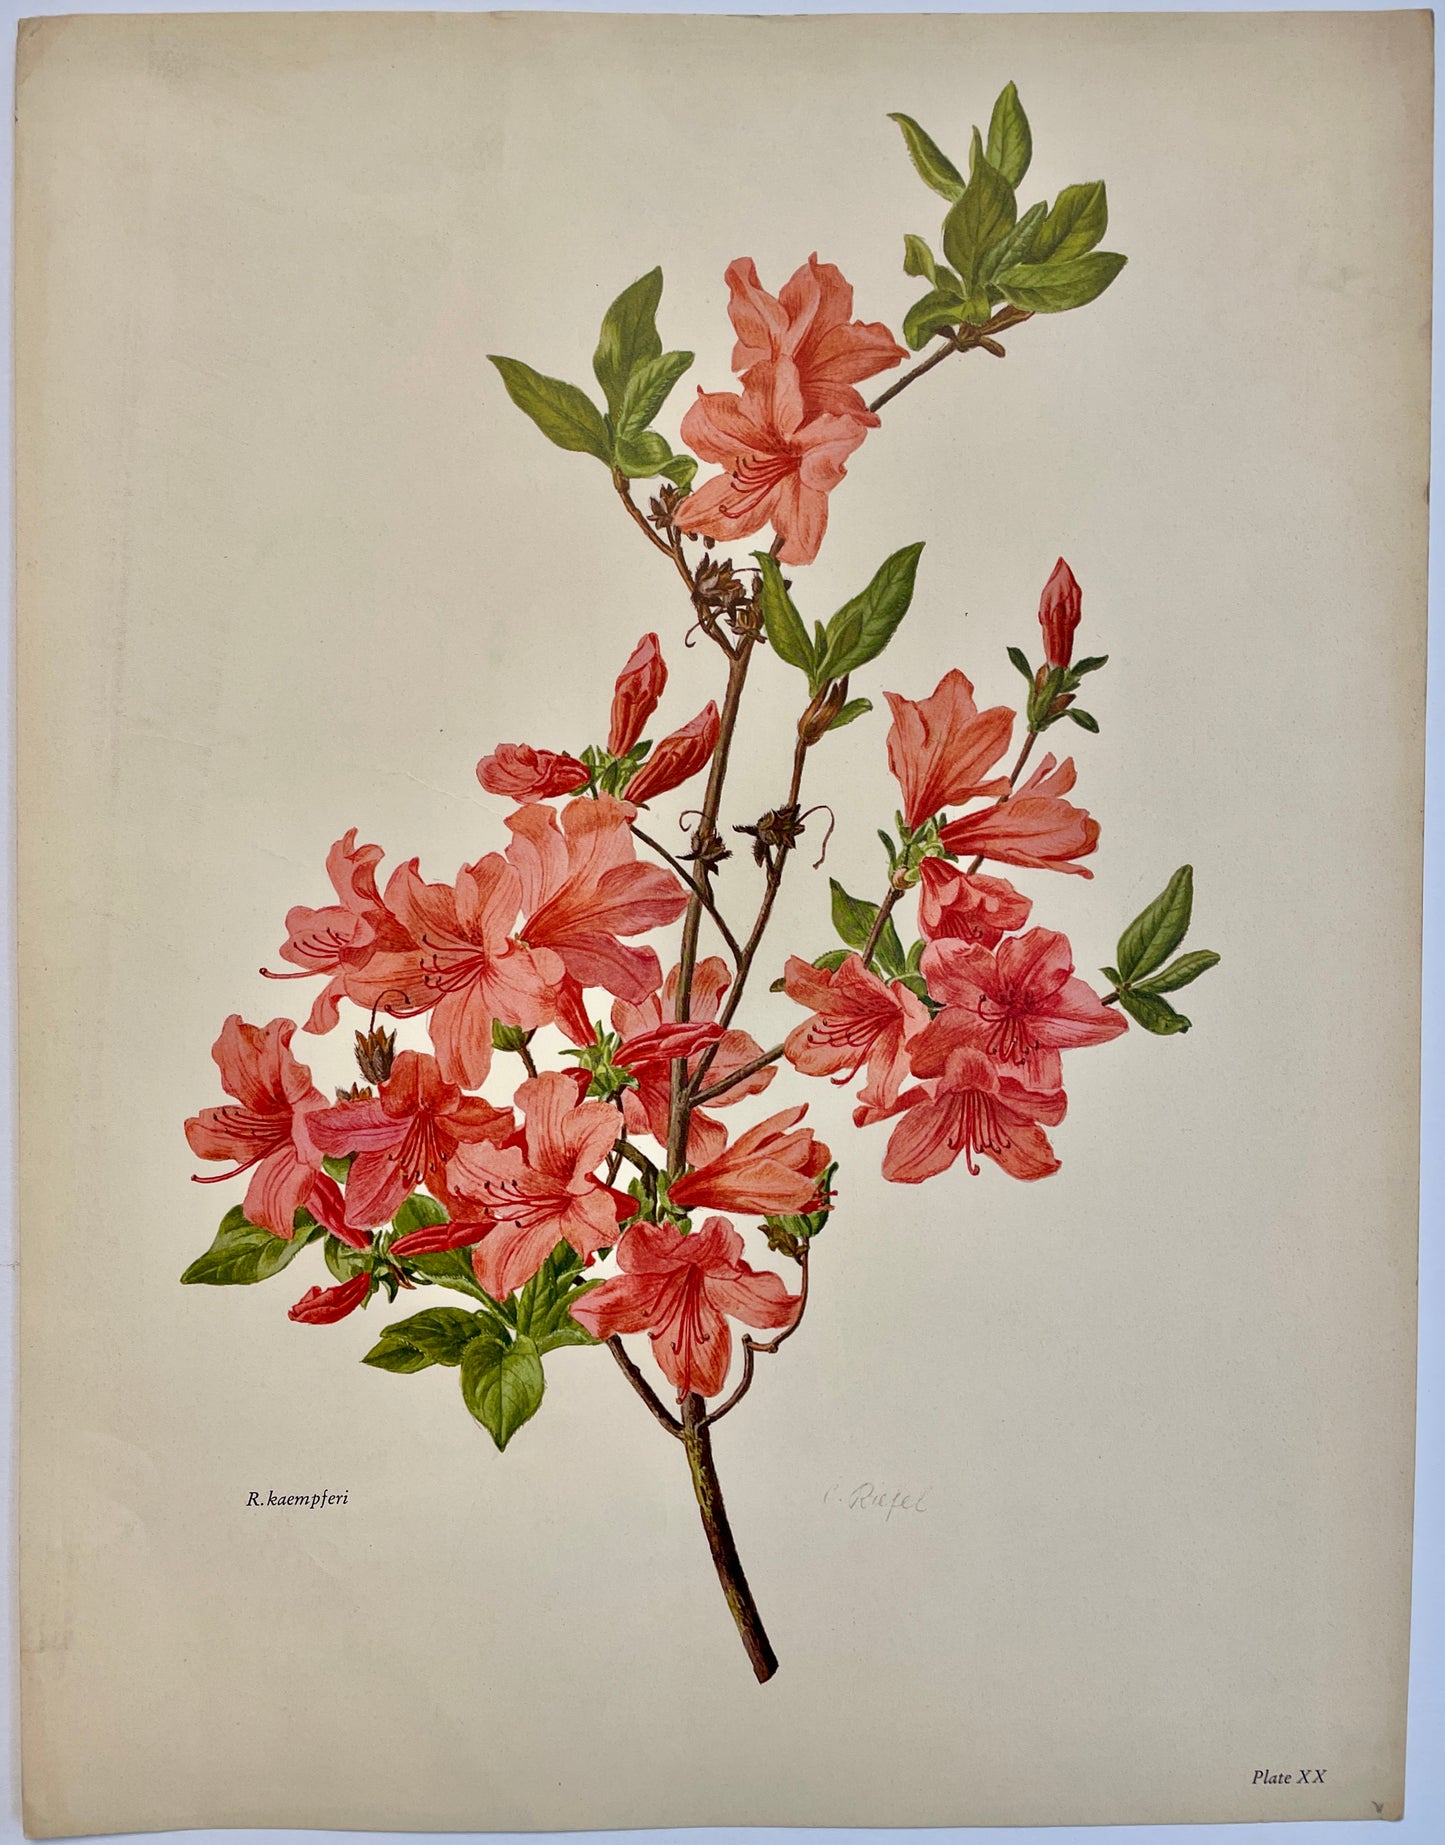 Rhododendron kaempferi lithograph